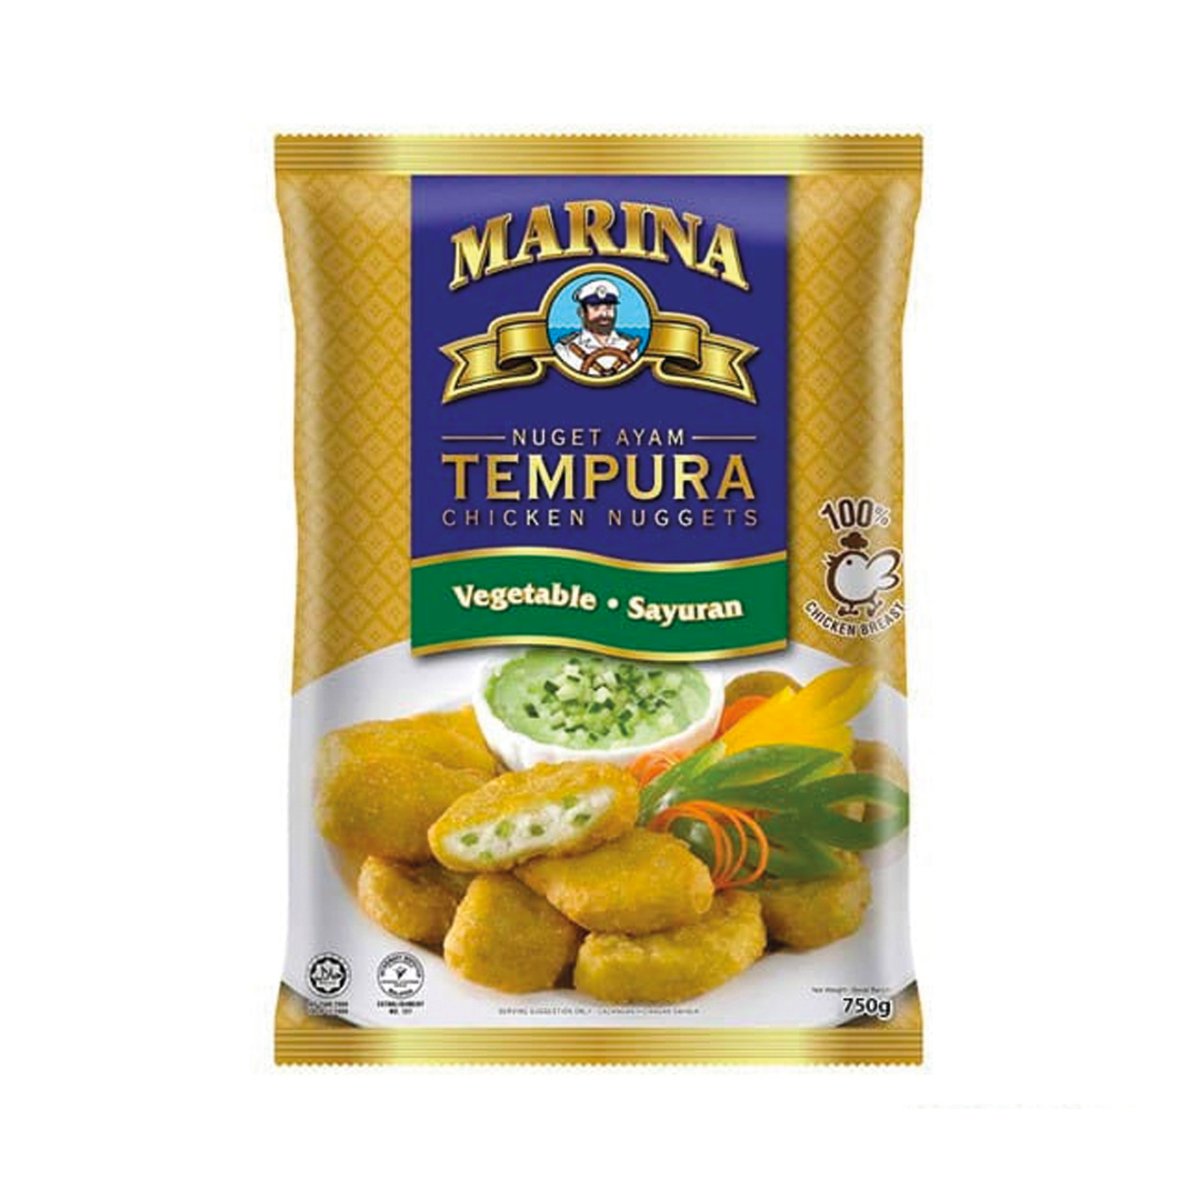 Marina Tempura Chicken Nugget Vege 750g